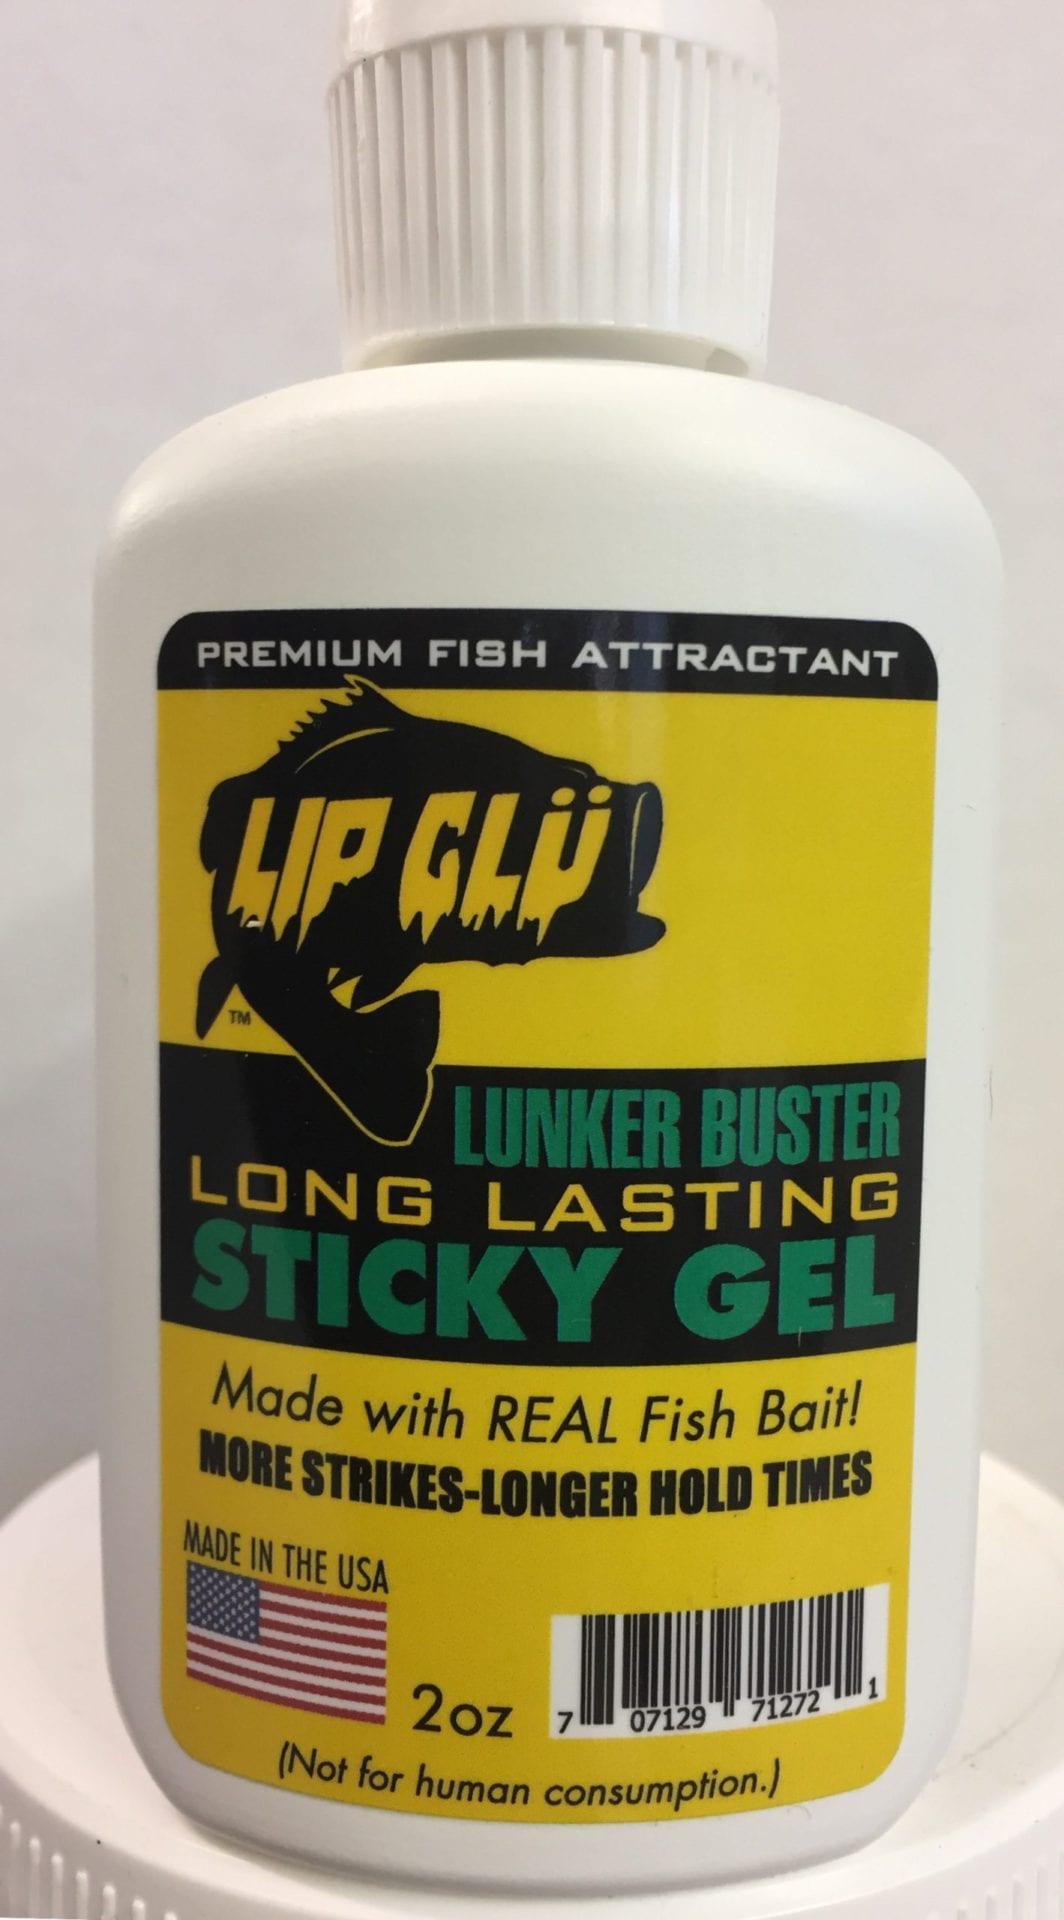 Lip Glu Sticky Gel Fish Attractant - Signal 11 Lures & Lip Glu